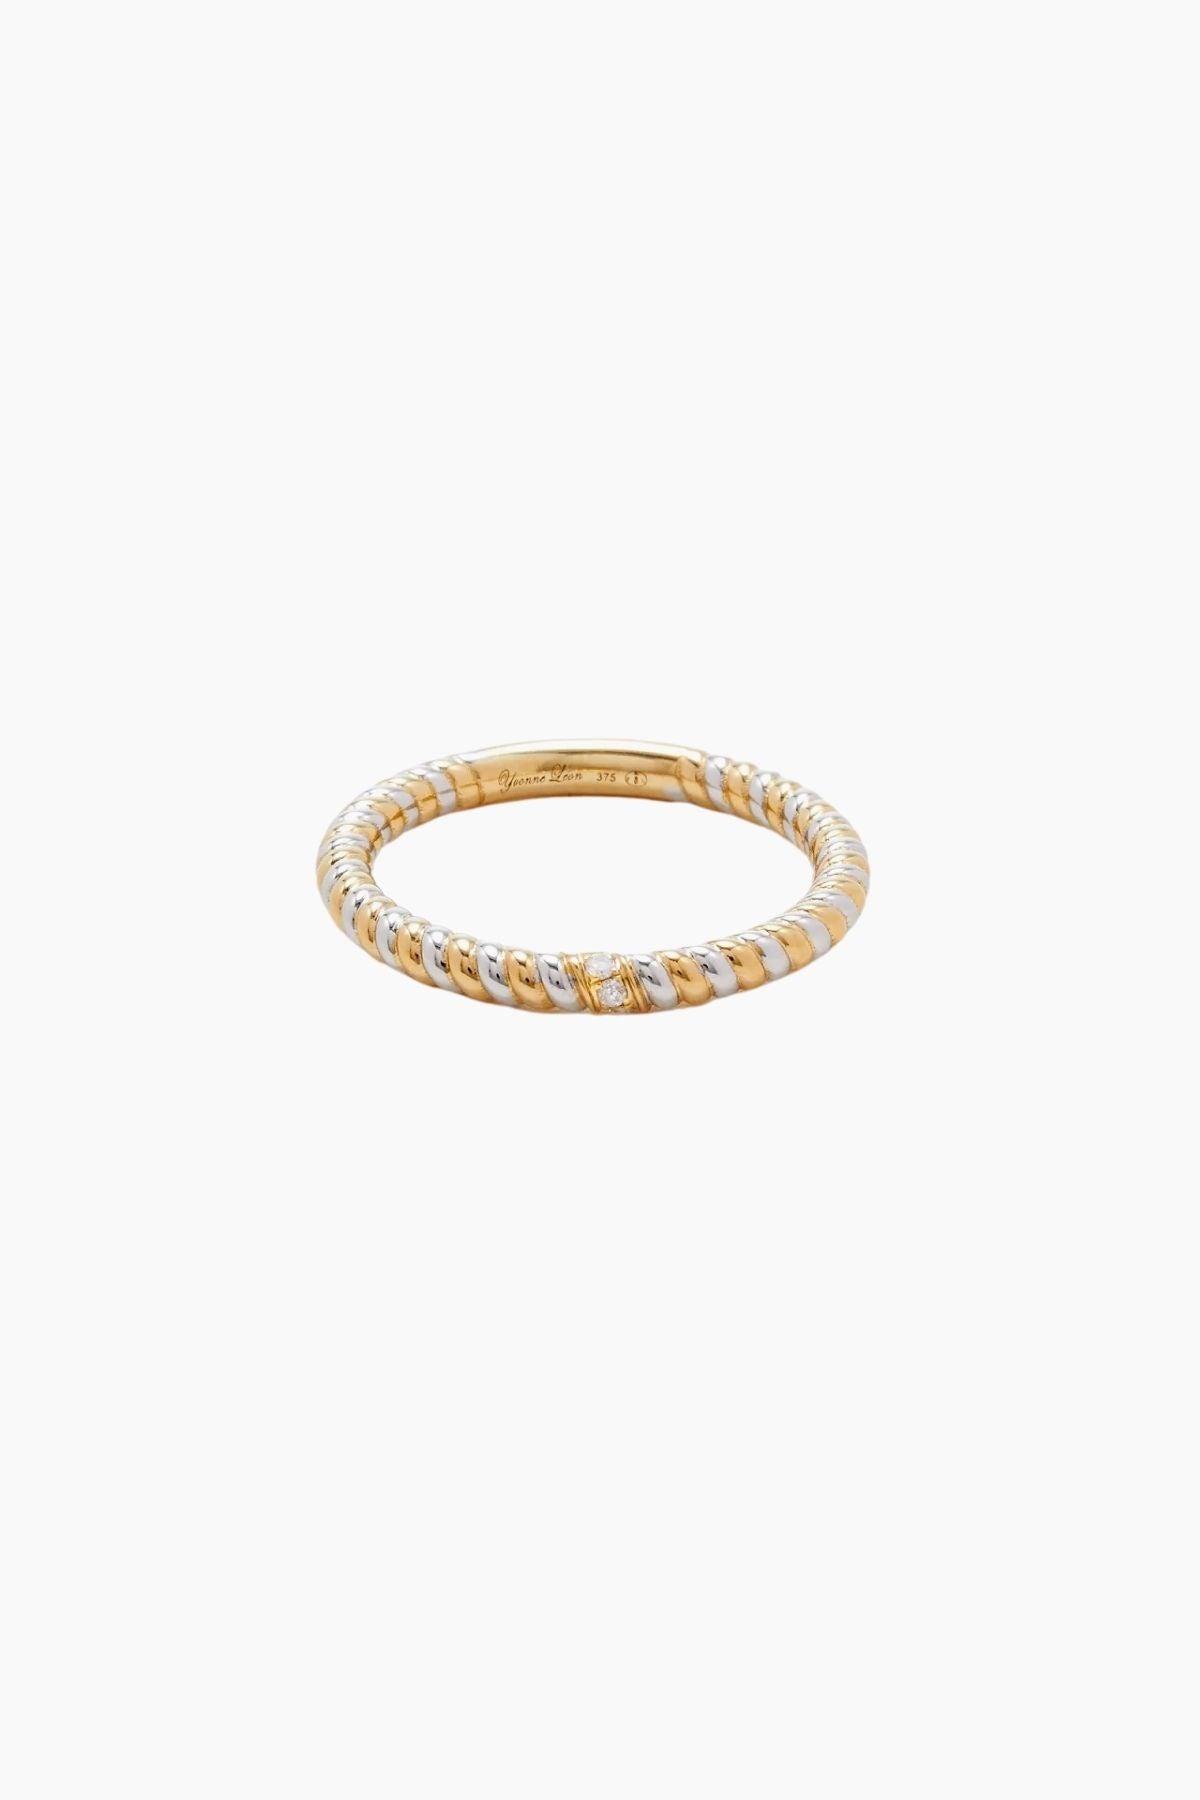 Yvonne Léon Alliance Mini Twist Diamond Ring - Yellow/ White Gold